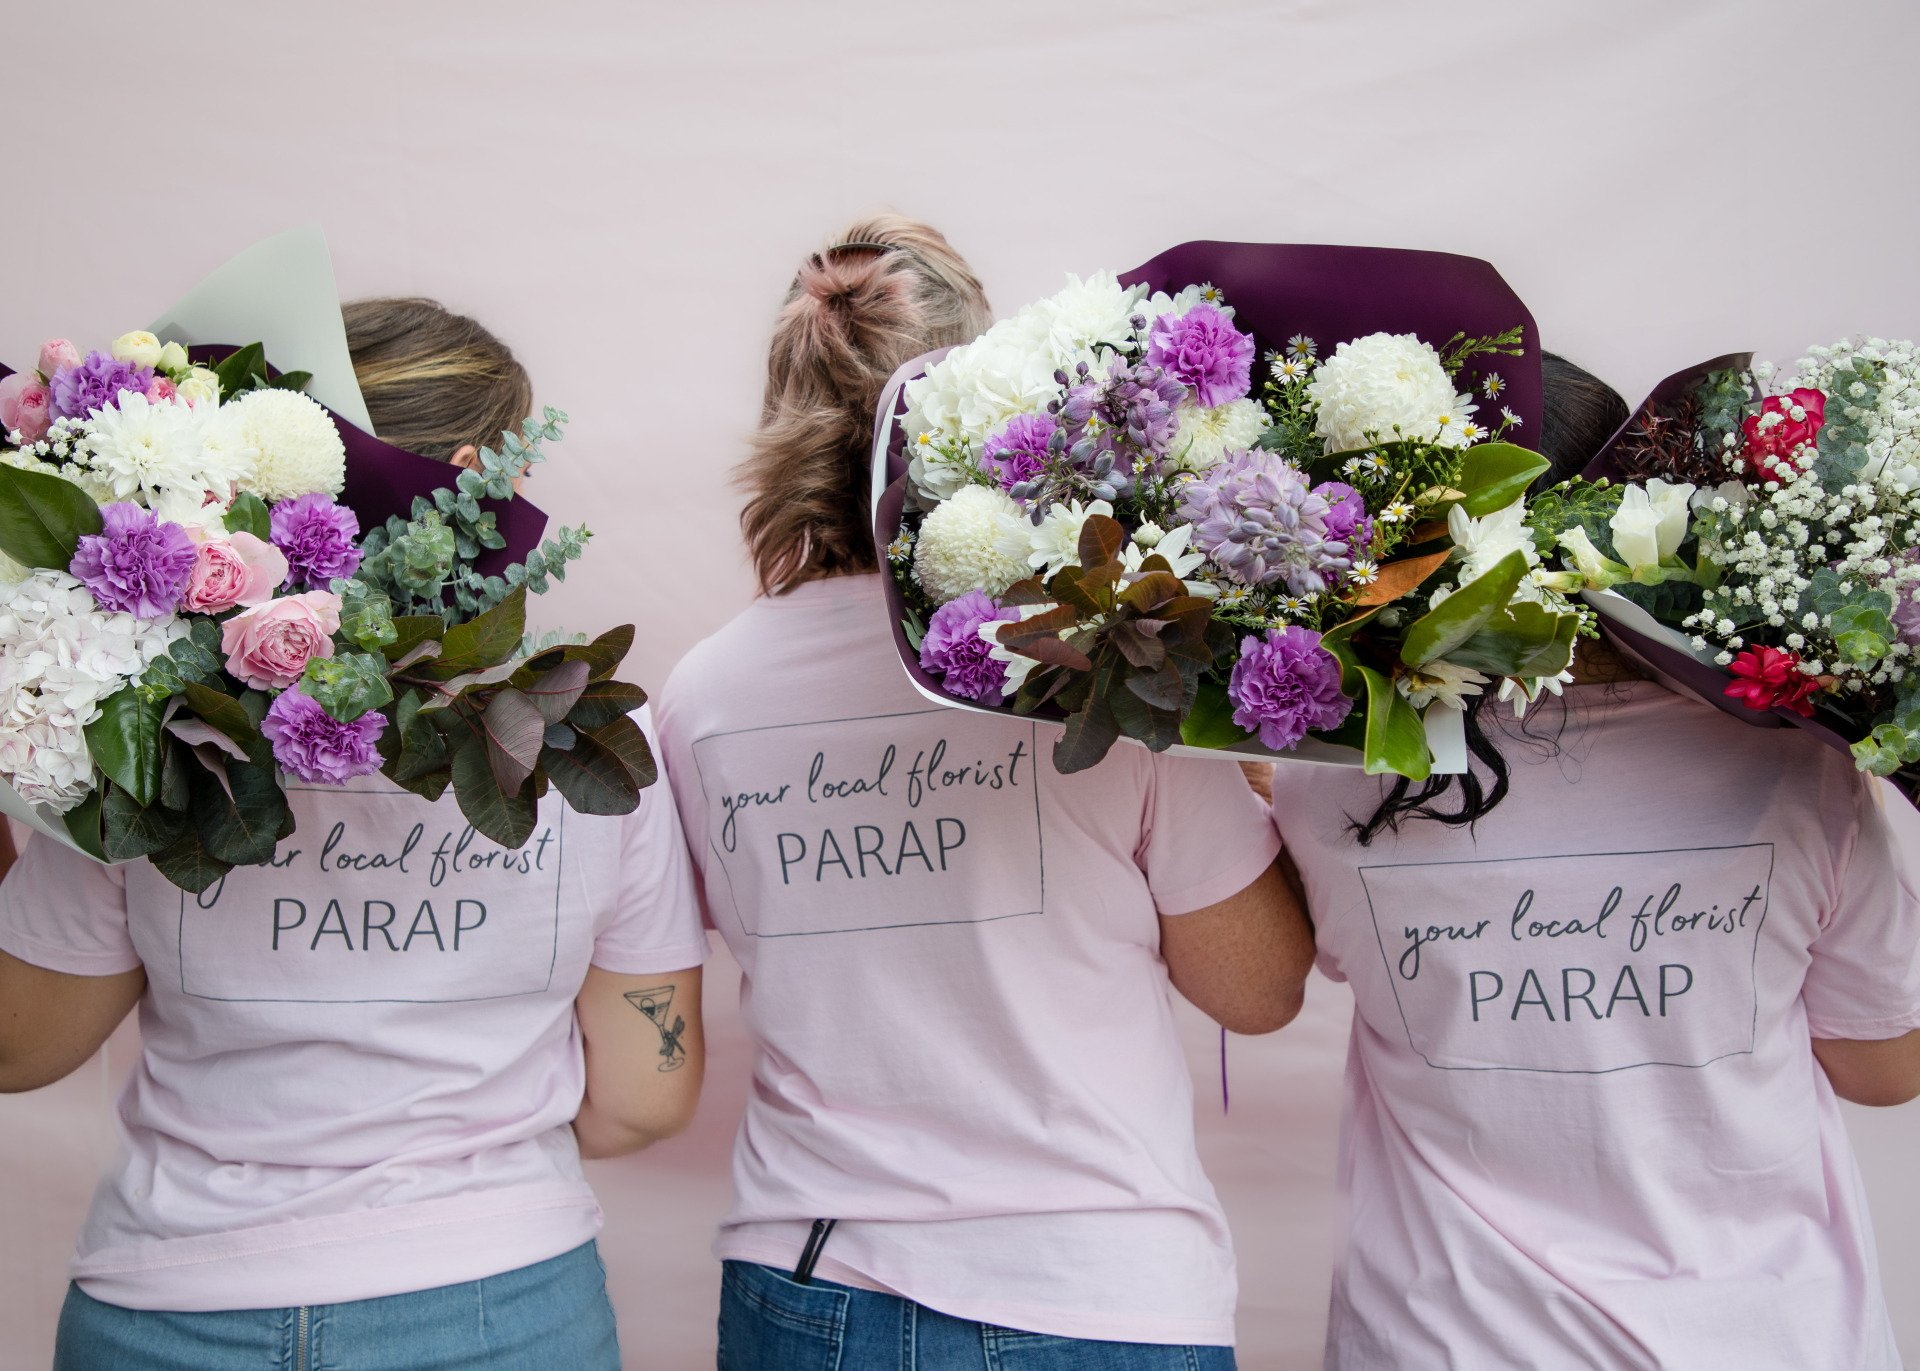 Darwin flower shop team showcasing vibrant purple blooms.